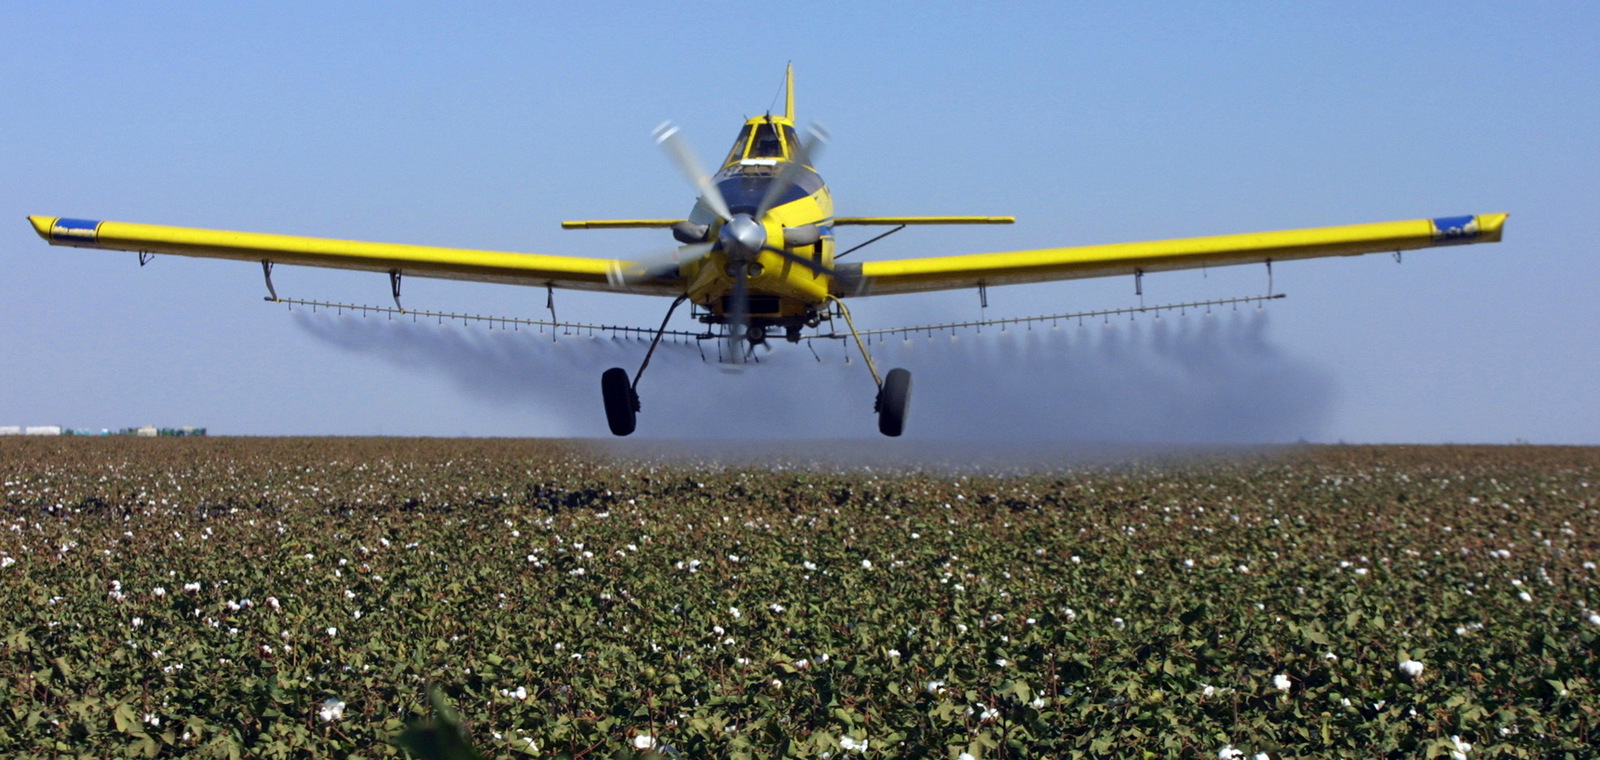 A crop dusting plane from Blair Air Service dusts cotton crops in Lemoore, Calif. (AP/Gary Kazanjian)